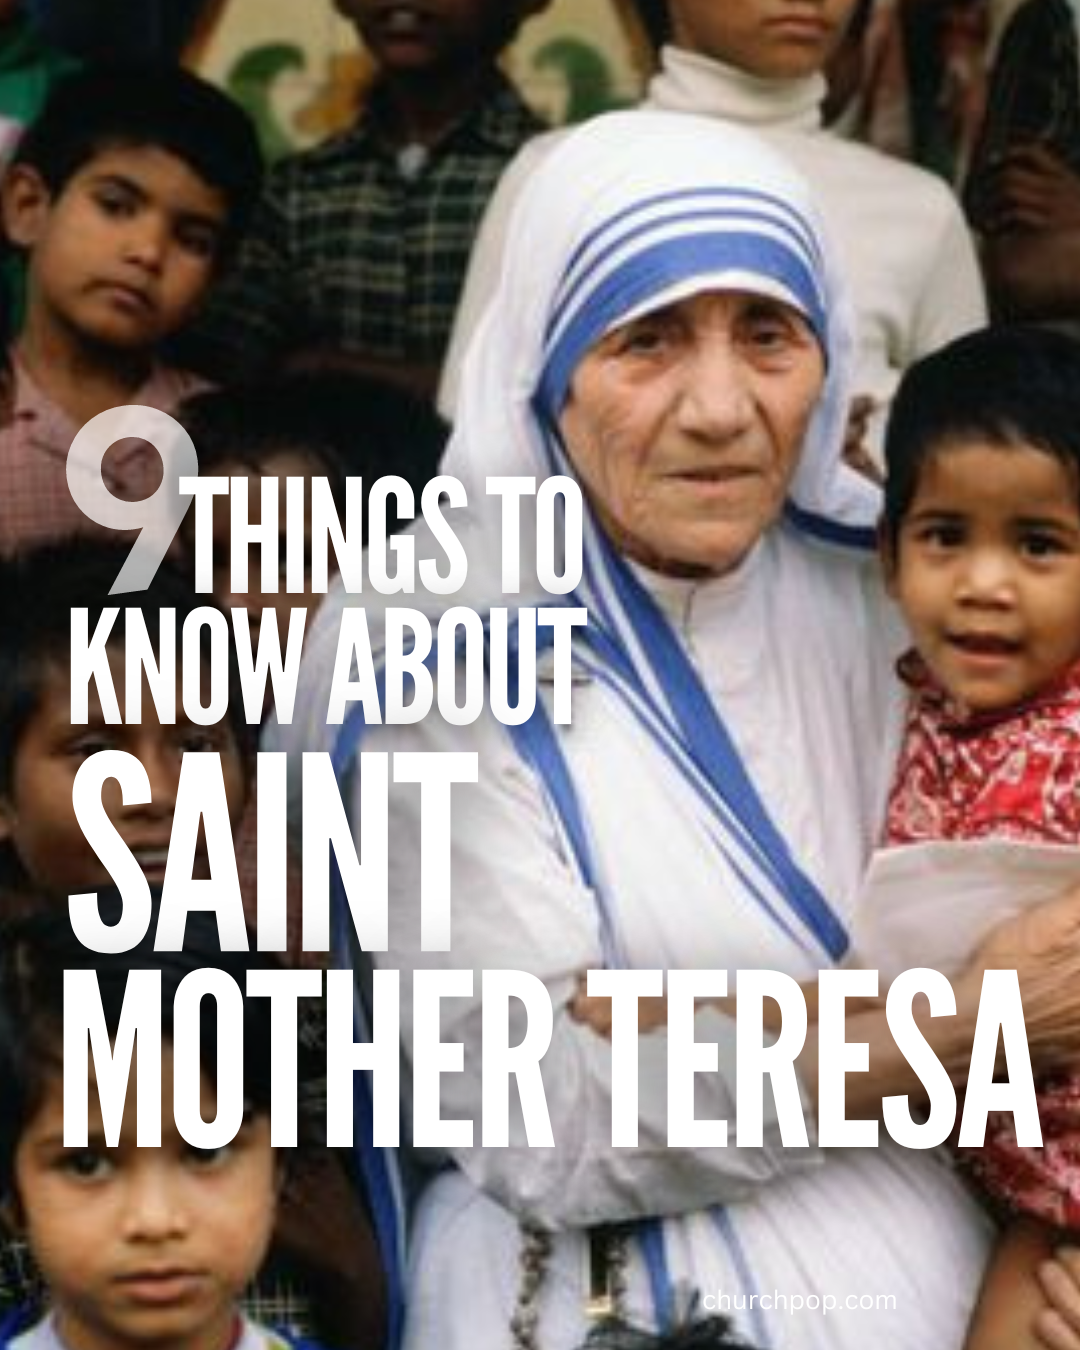 Who was Mother Teresa